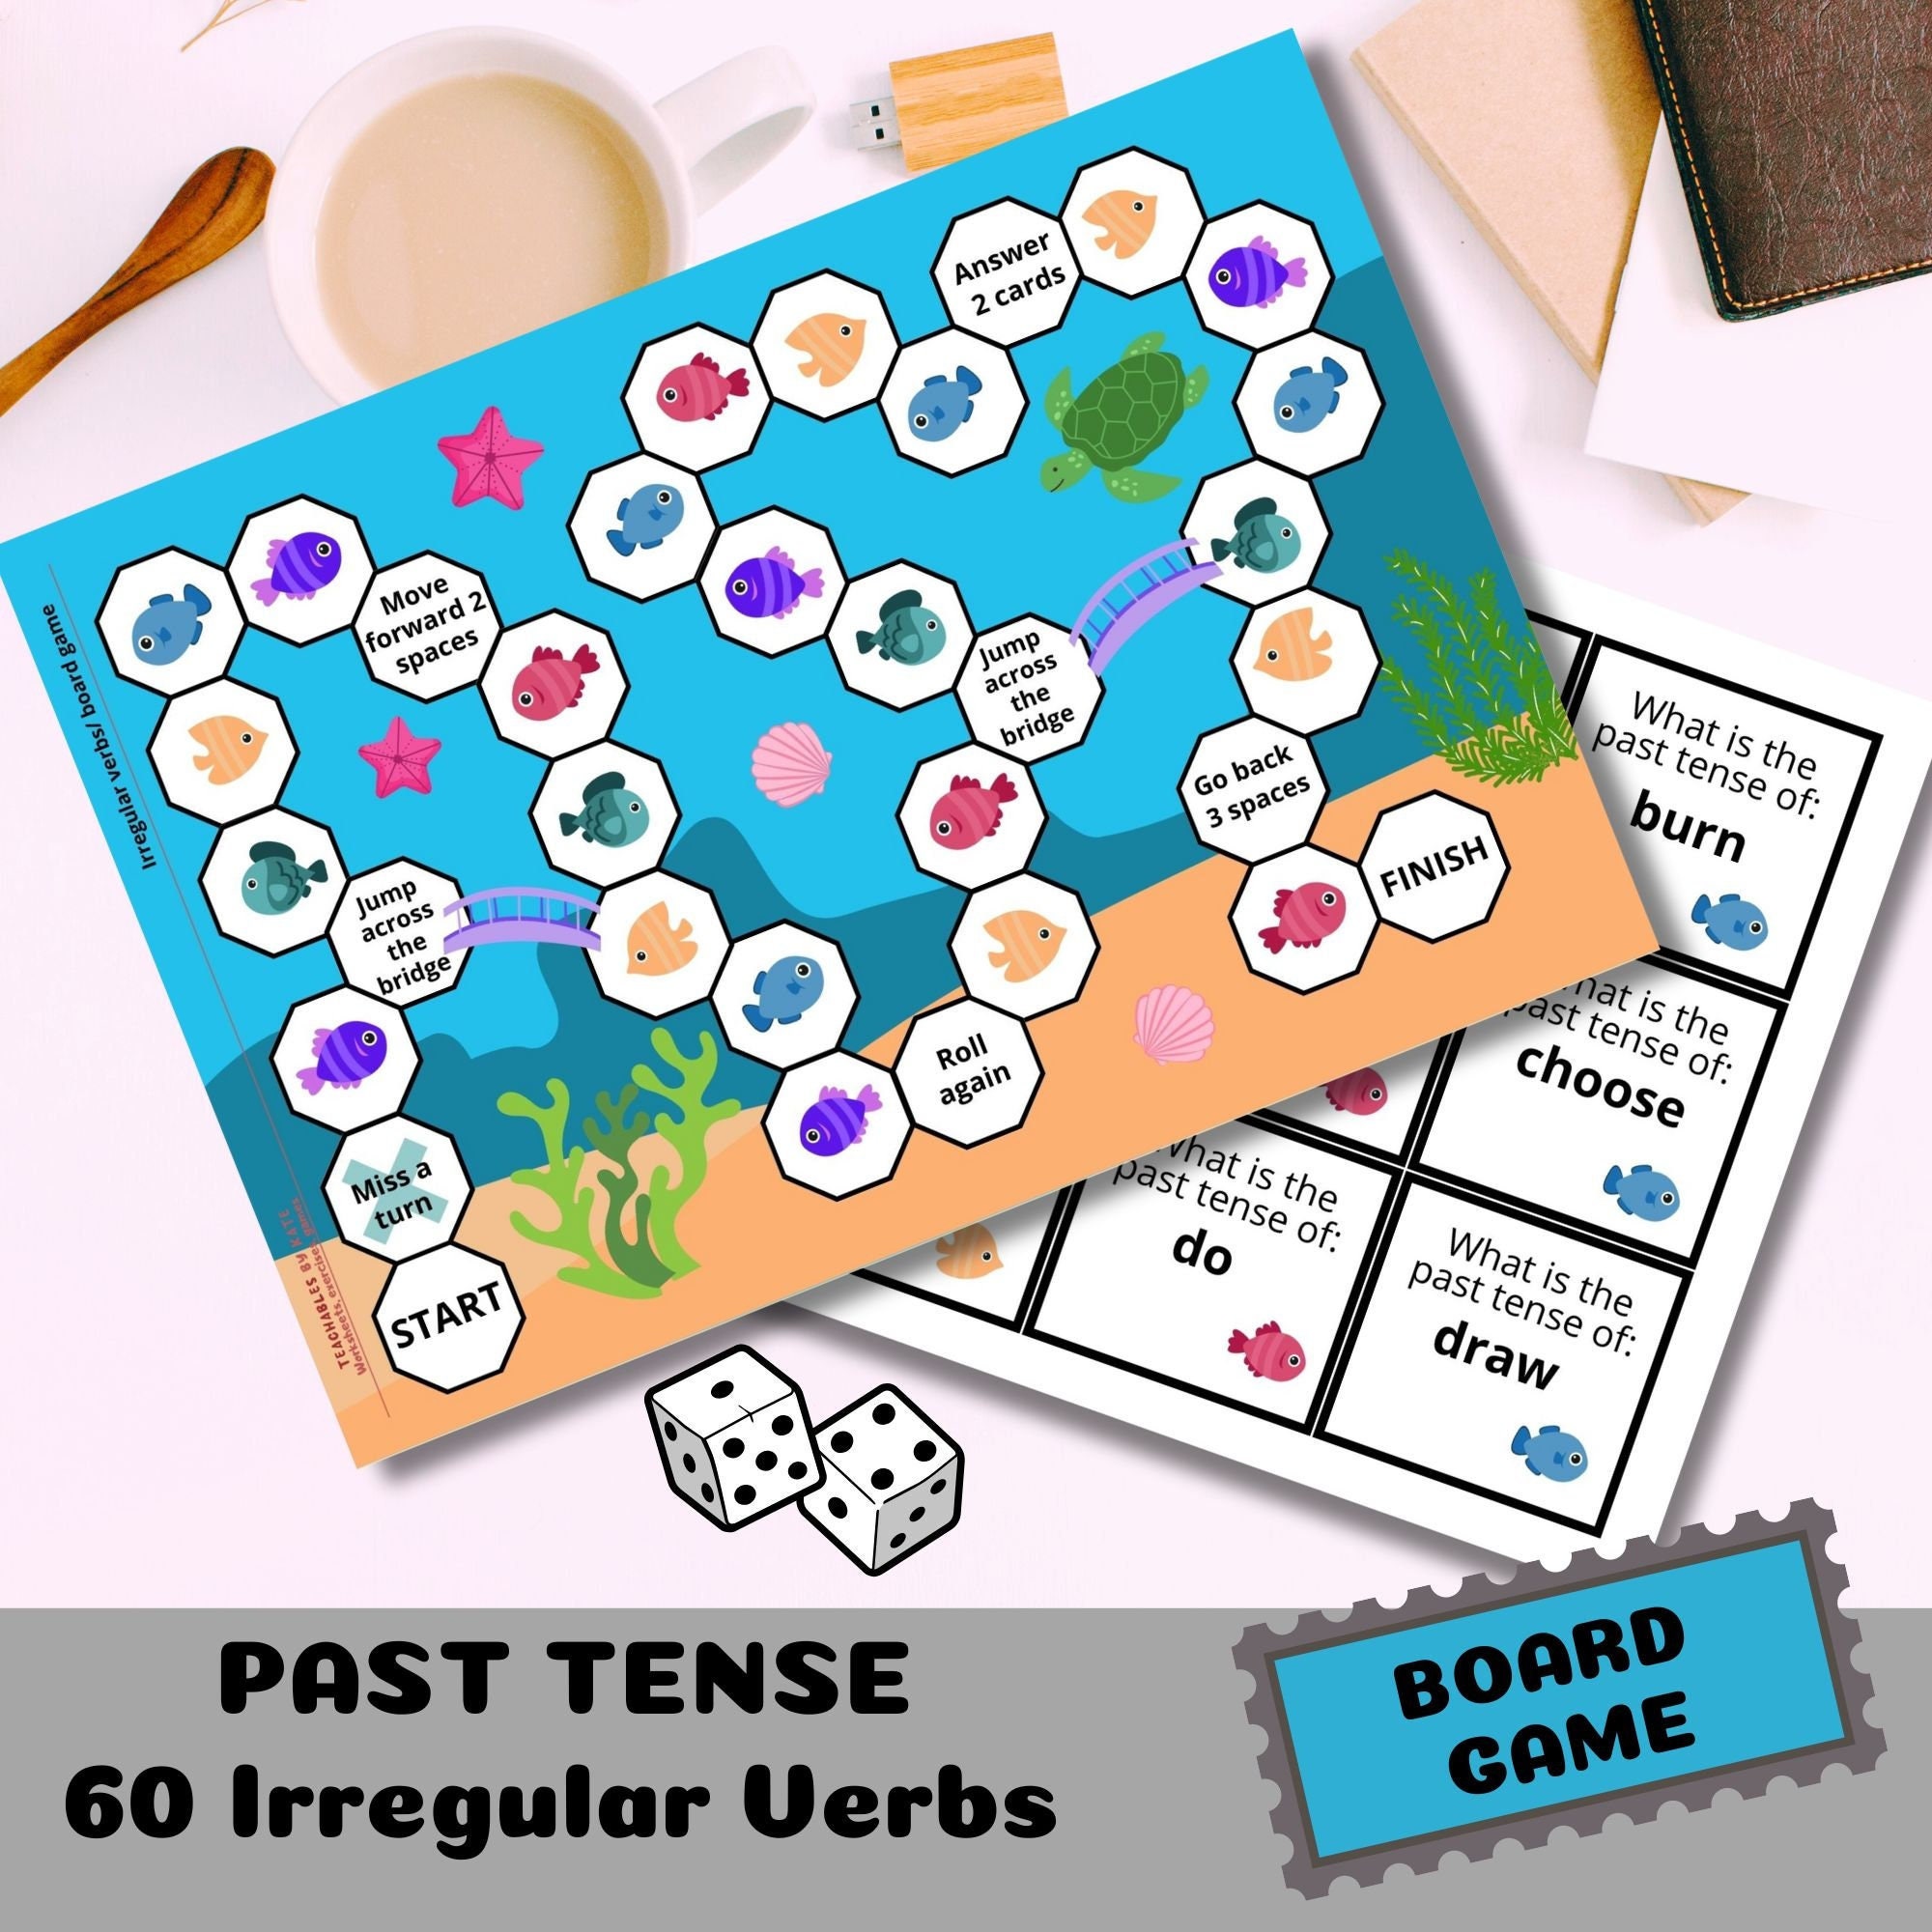 Irregular past tense verbs online board game